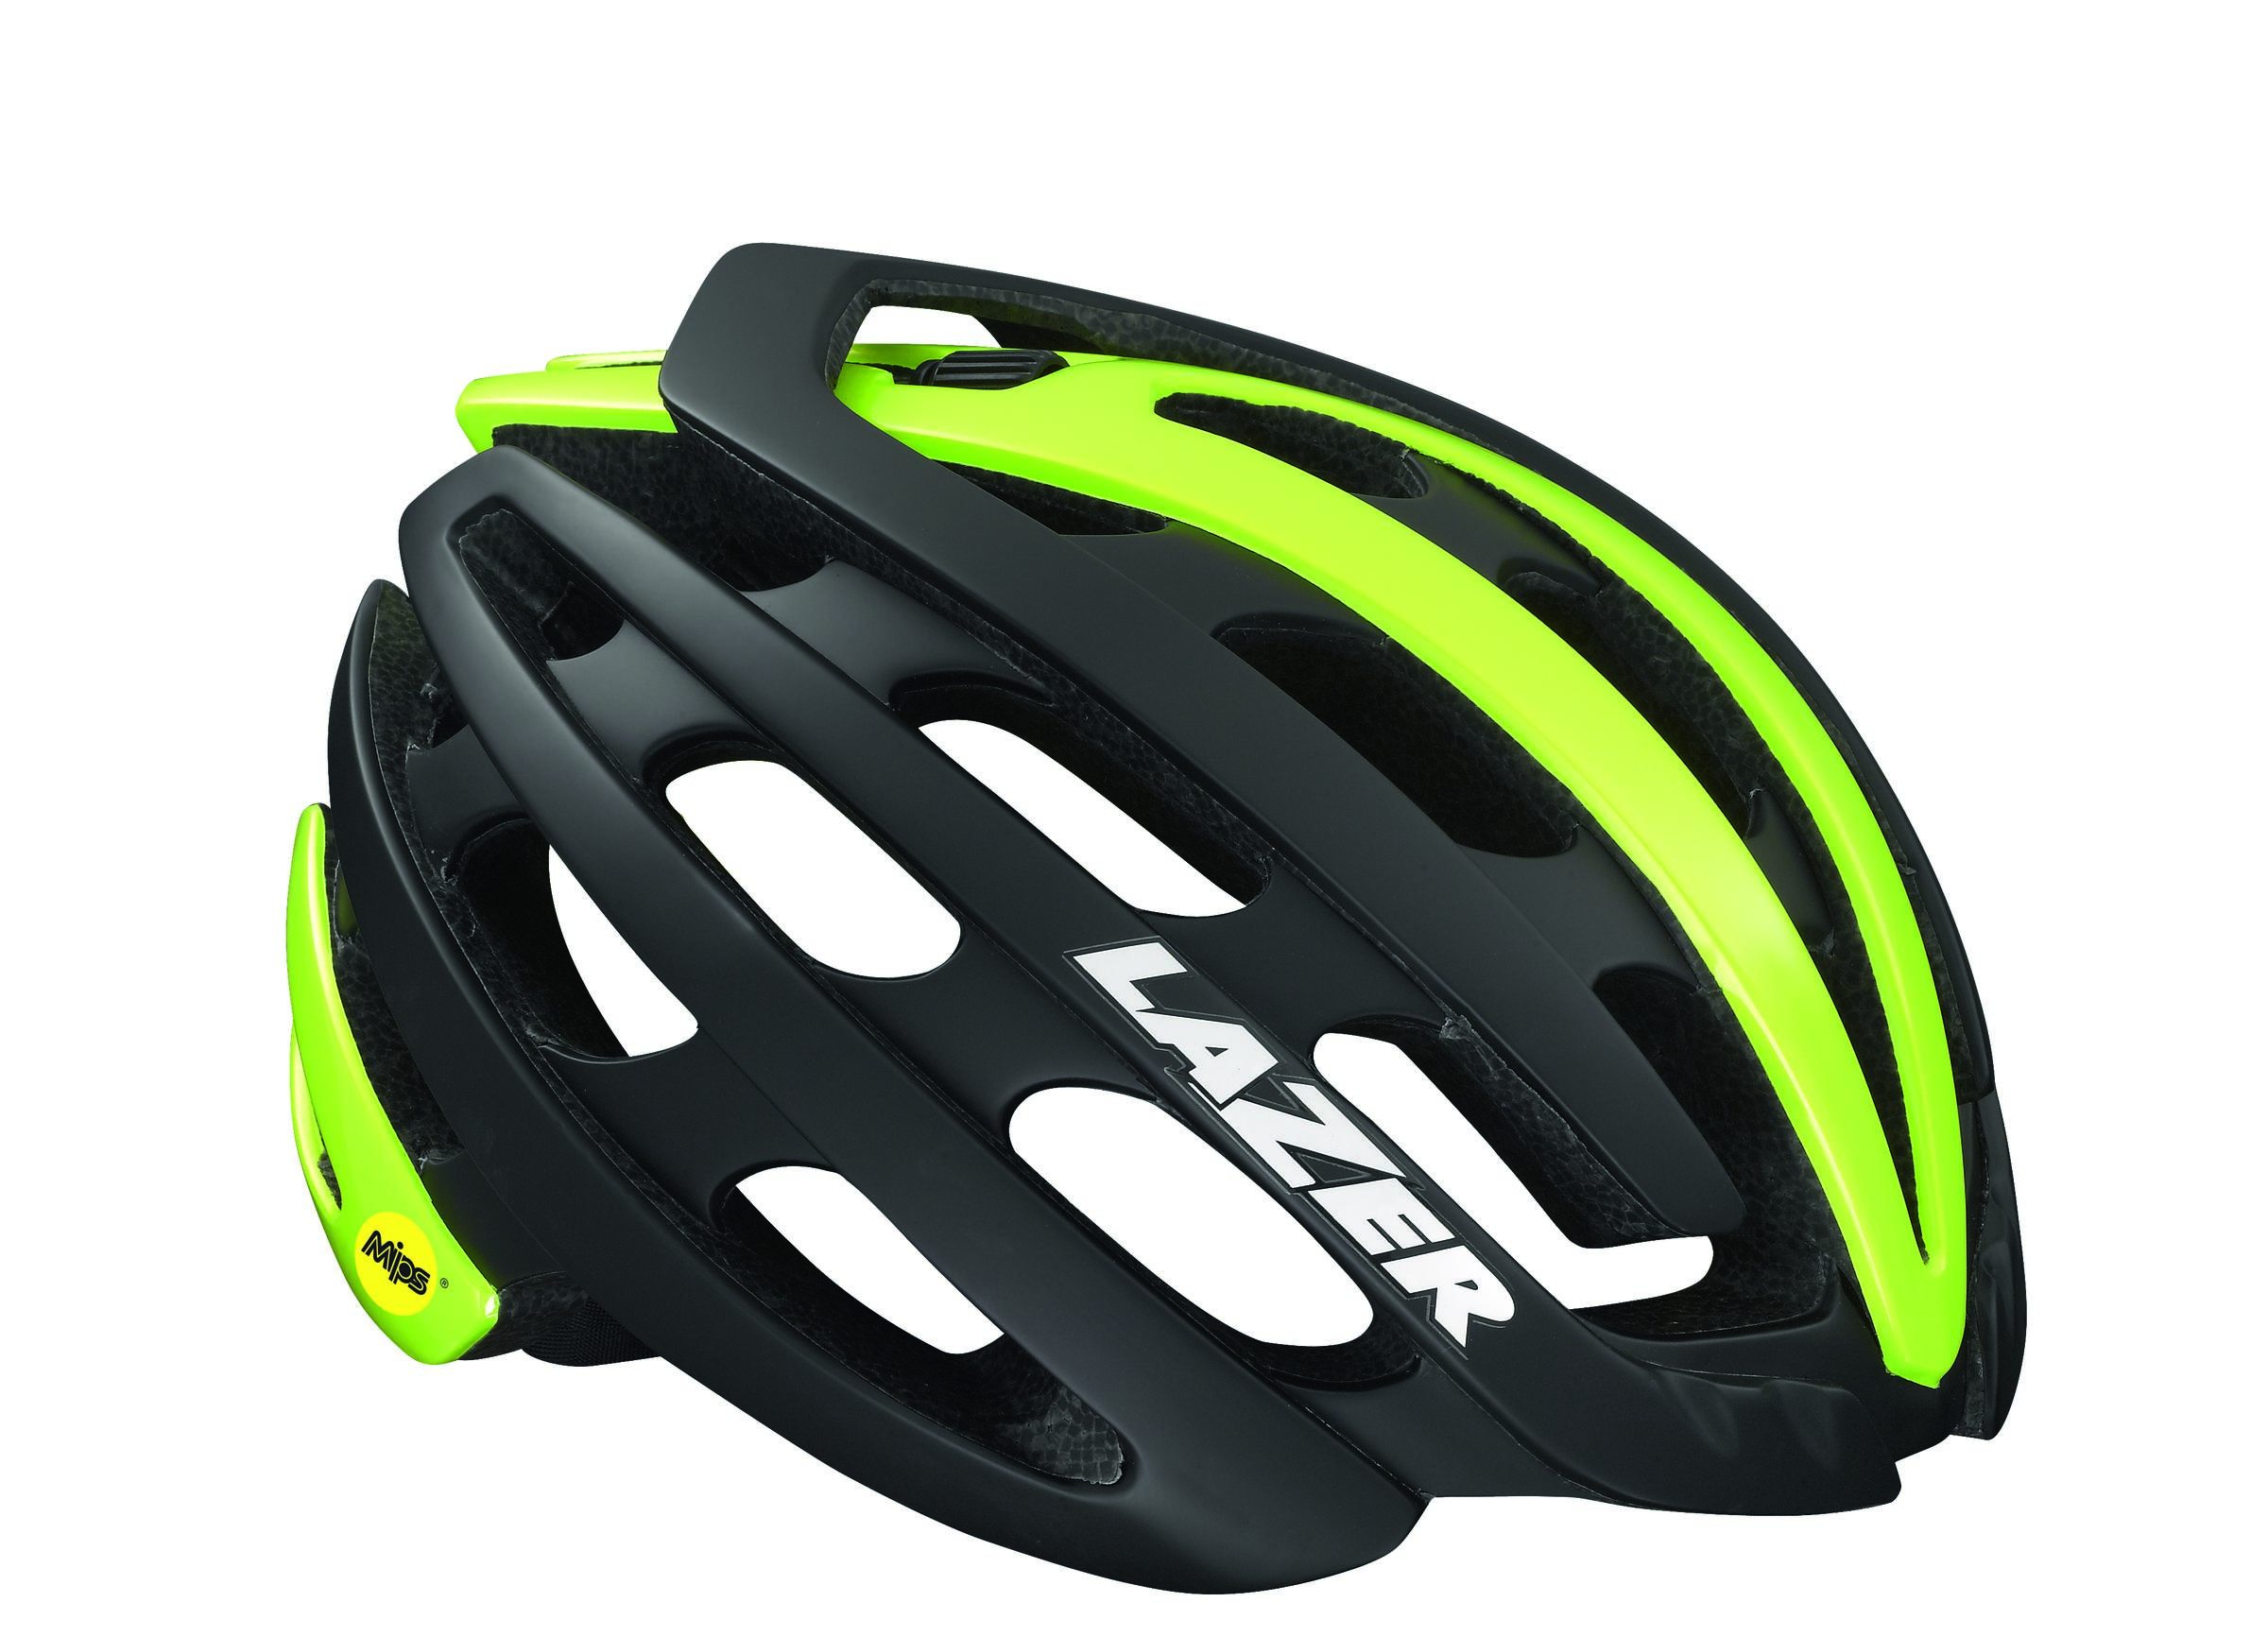 thema Respect vallei Lazer Sport Z1 MIPS Helmet - Brielle Cyclery | New Jersey